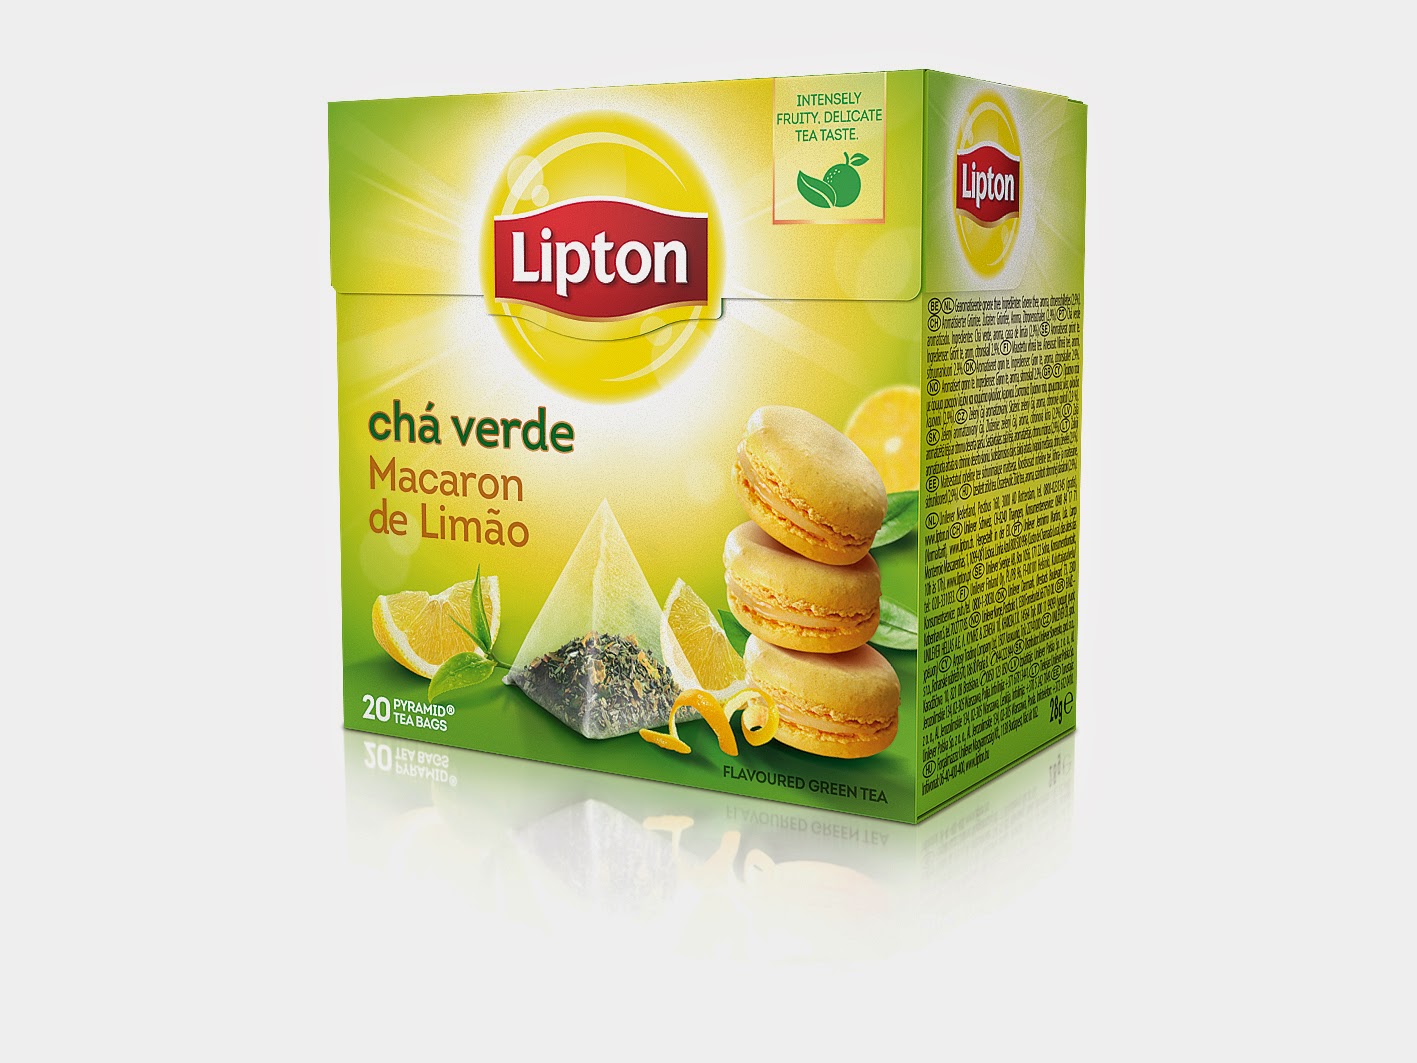 Novo sabor chá Lipton Macarron de Limão